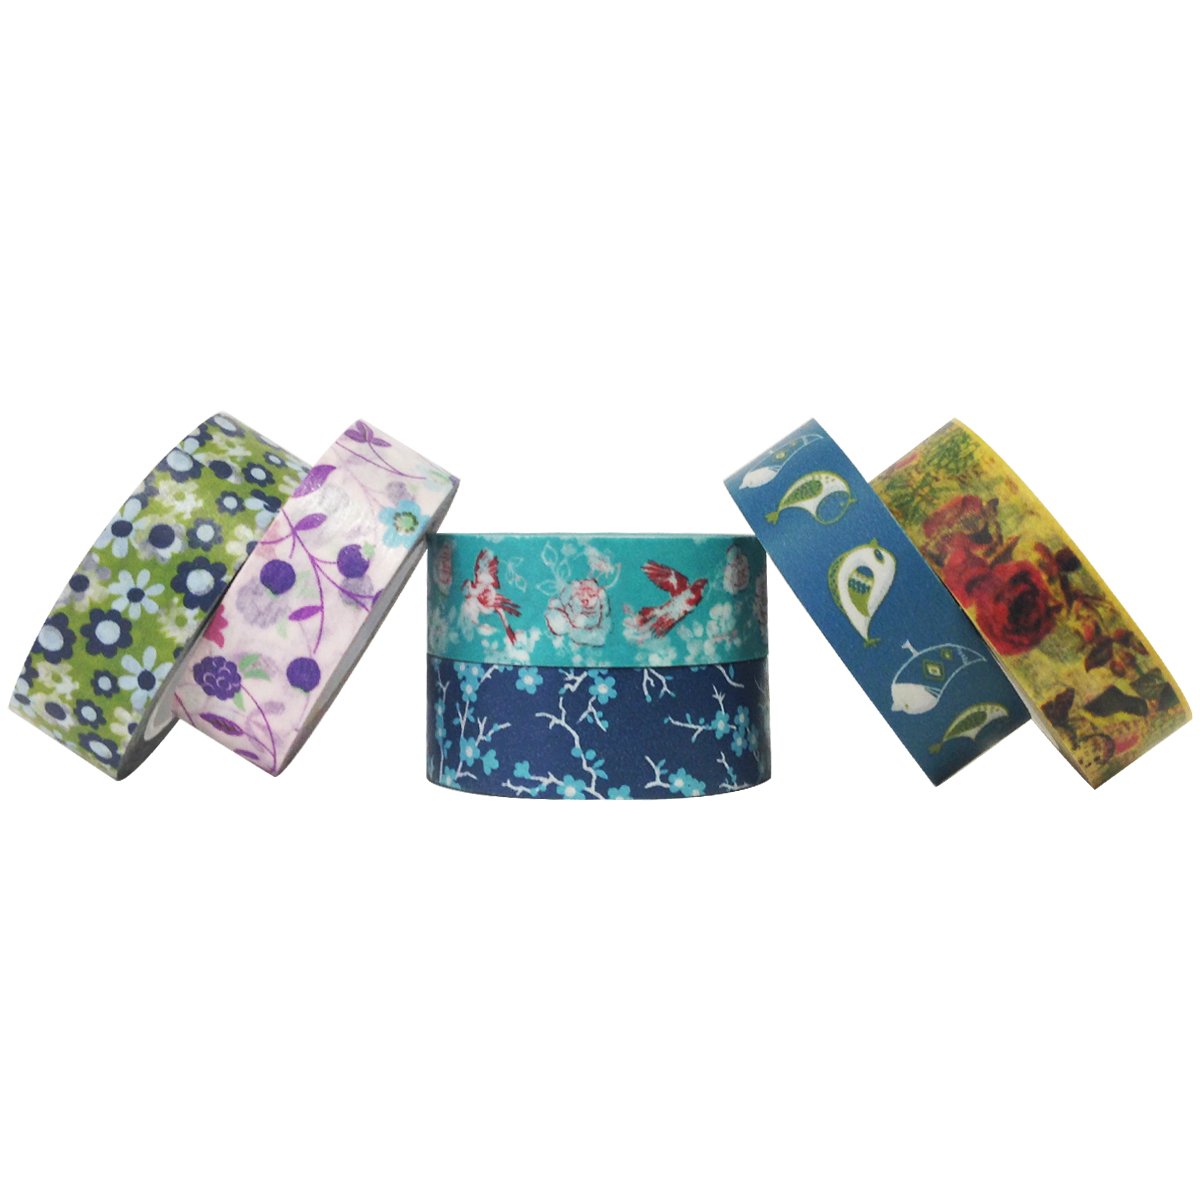 allydrew Japanese Washi Masking Tape Collection, Premium Value Pack (Set of 6) VPK21